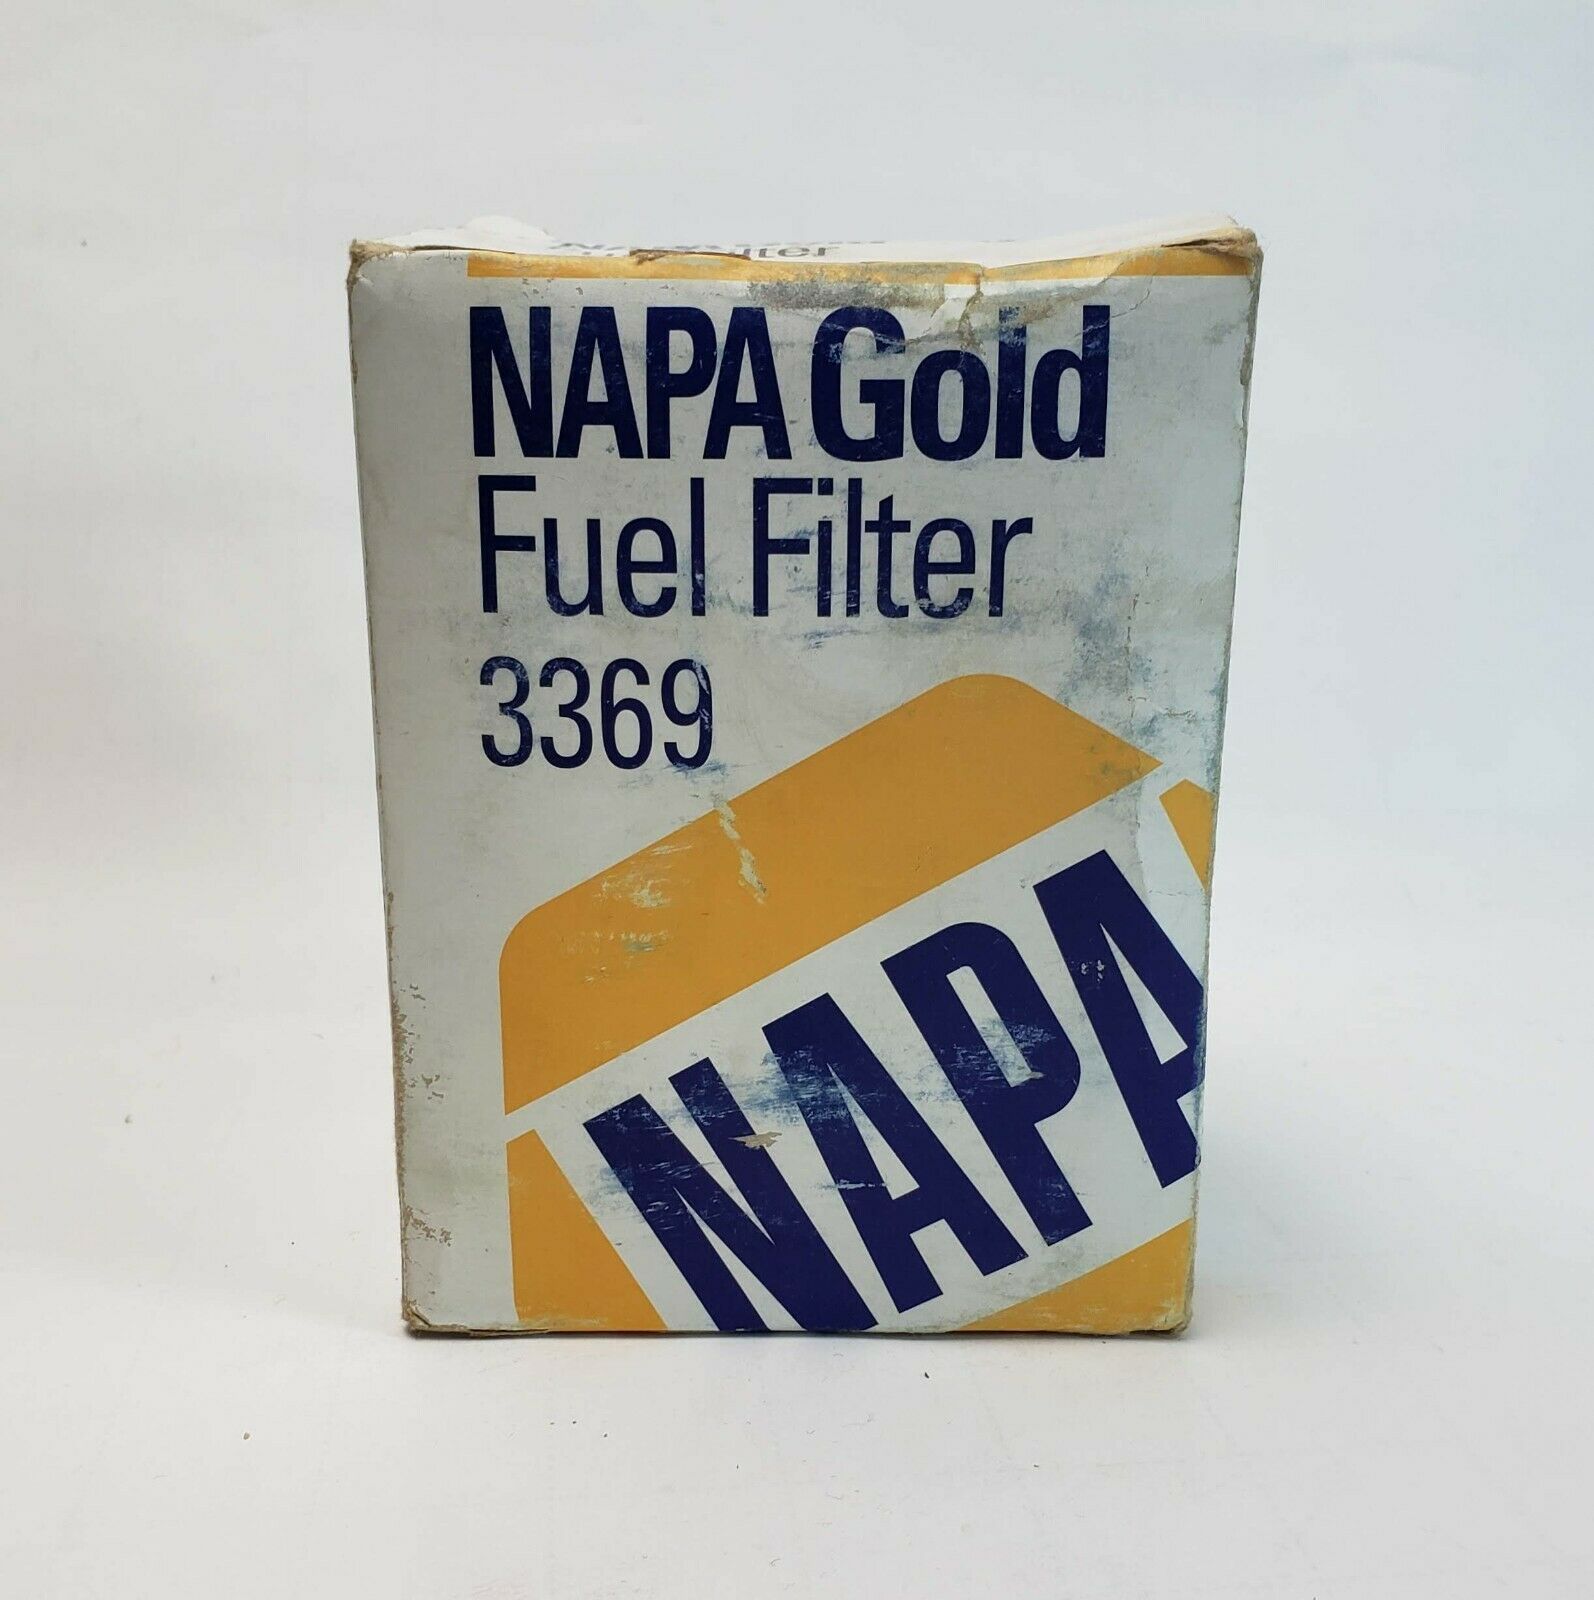 NAPA Gold Fuel Filter 3369 In Box - $28.04